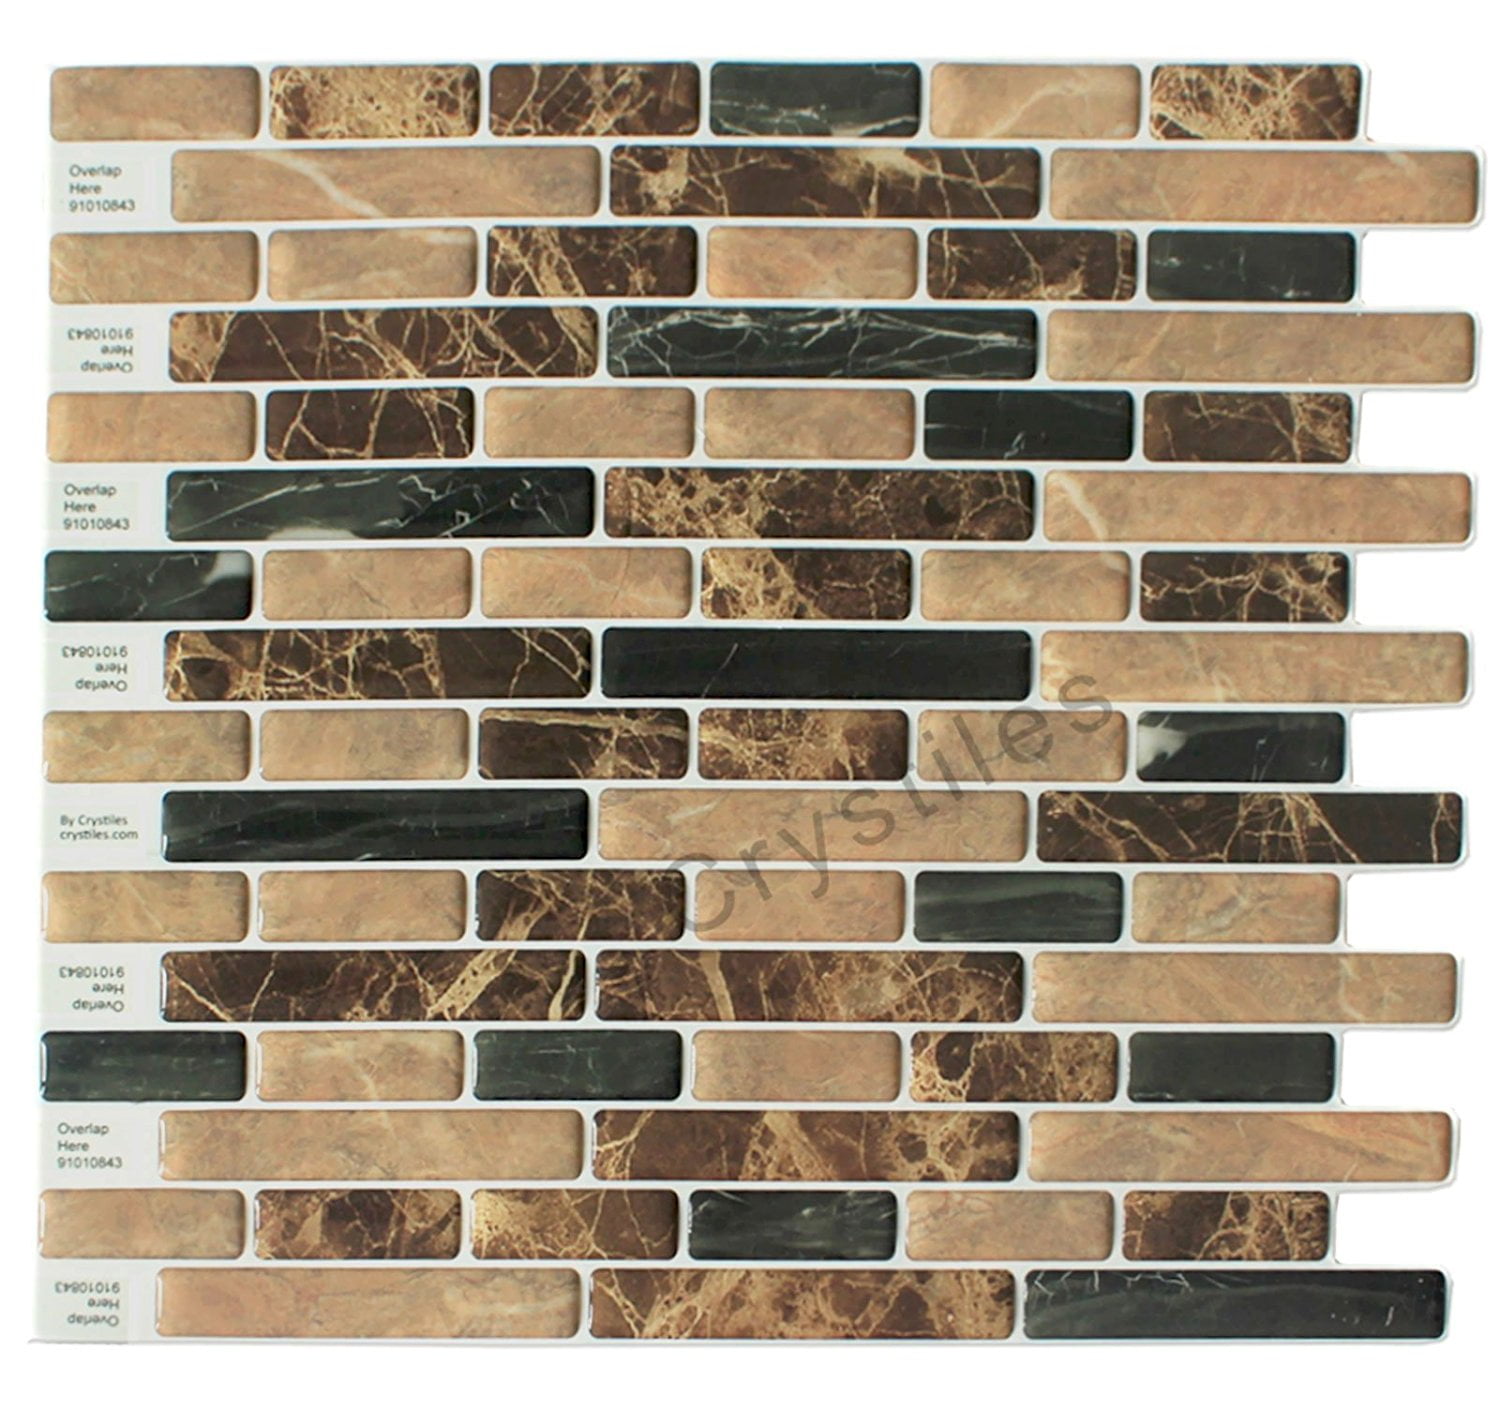 10 Tiles Magictiles 10.65 x 10 Peel and Stick Kitchen Backsplash Wall Tile